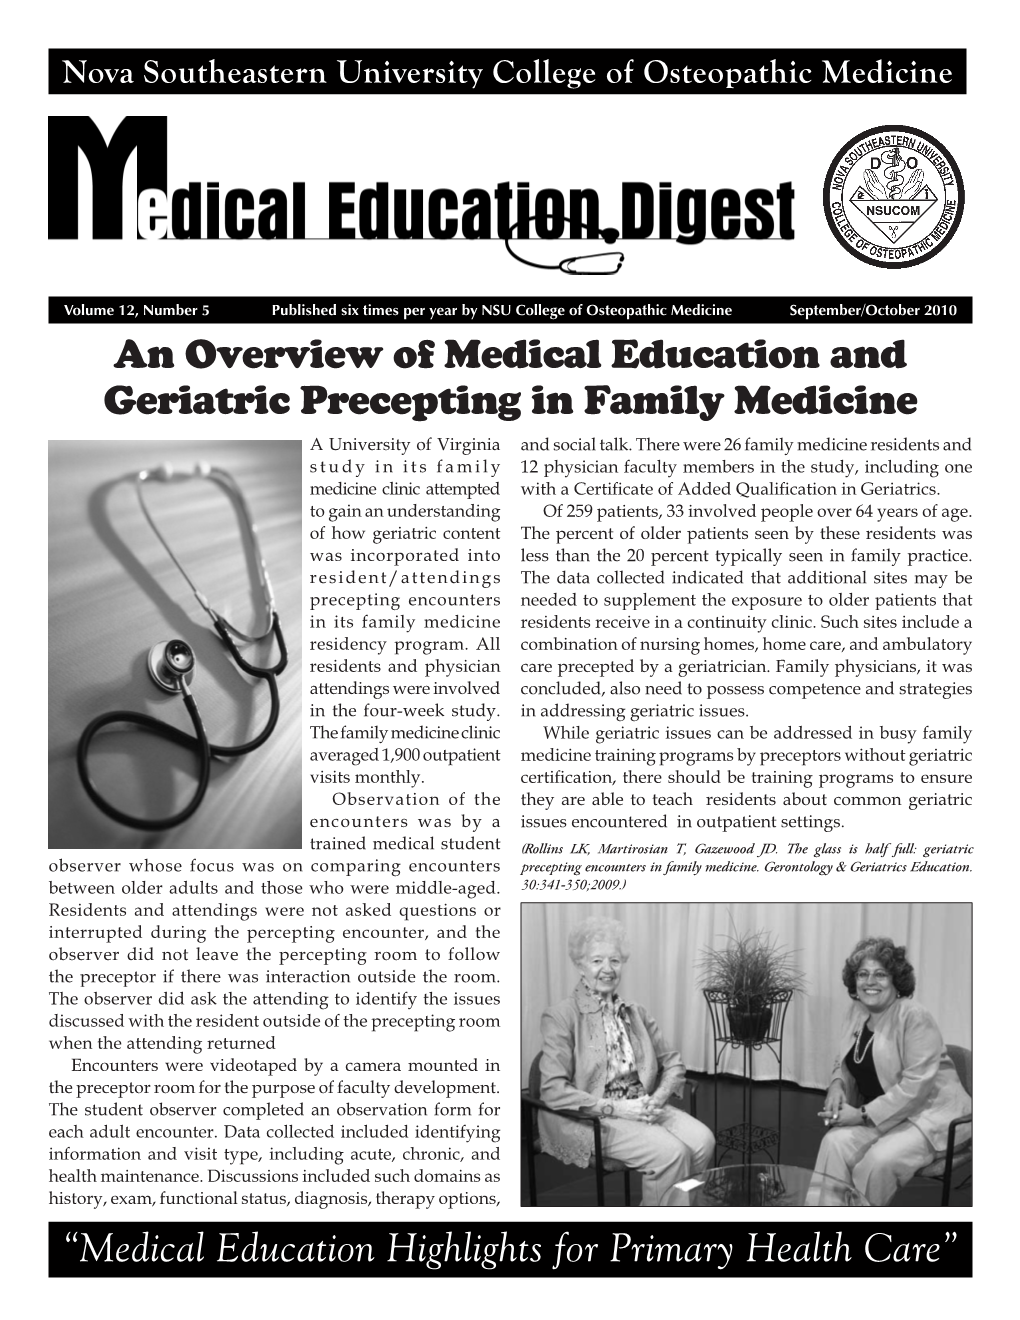 NSU-COM Medical Education Digest